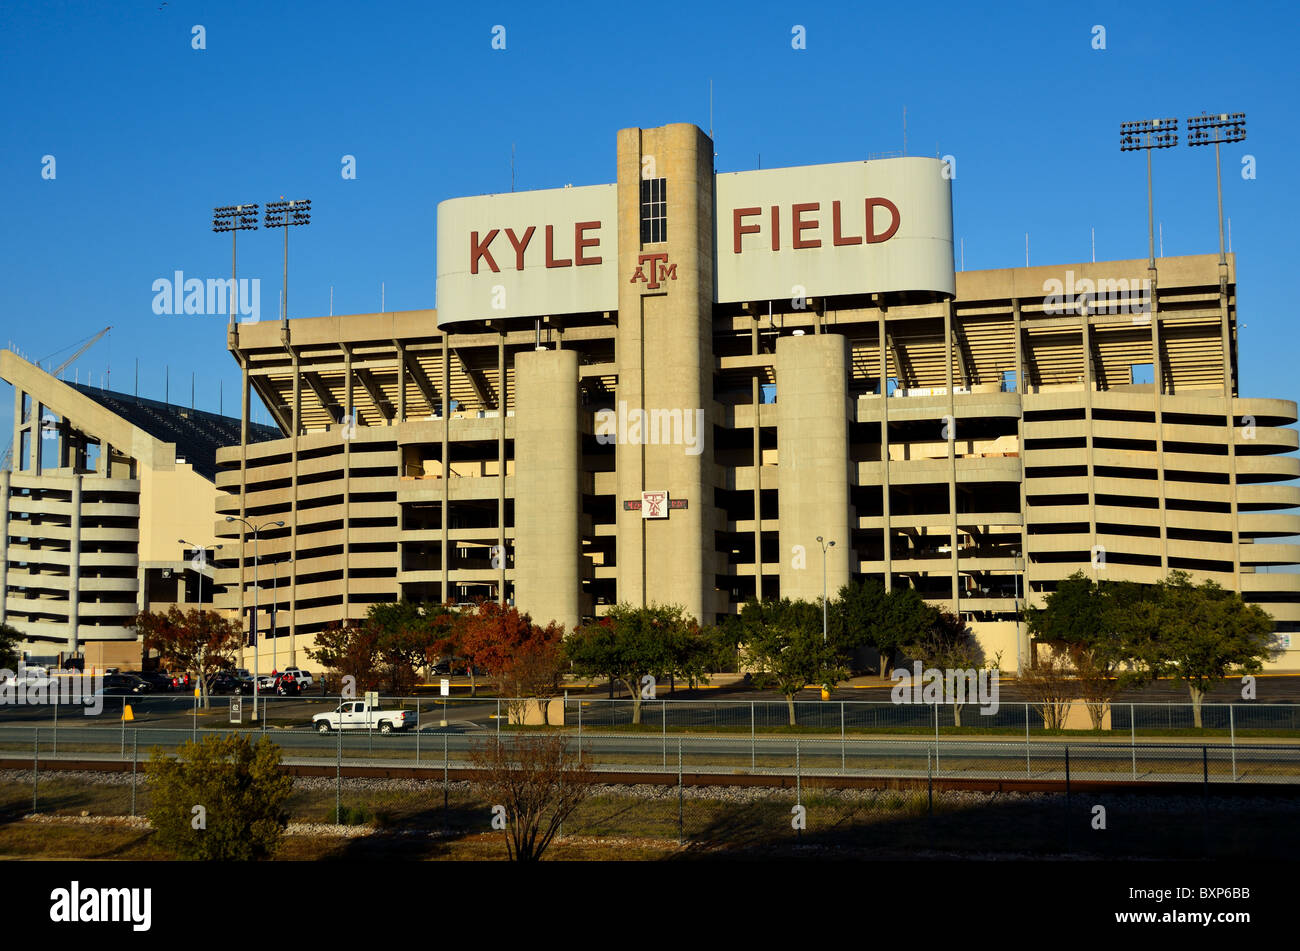 Kyle field, Texas A&M University, College Station, Texas, USA. Stock Photo